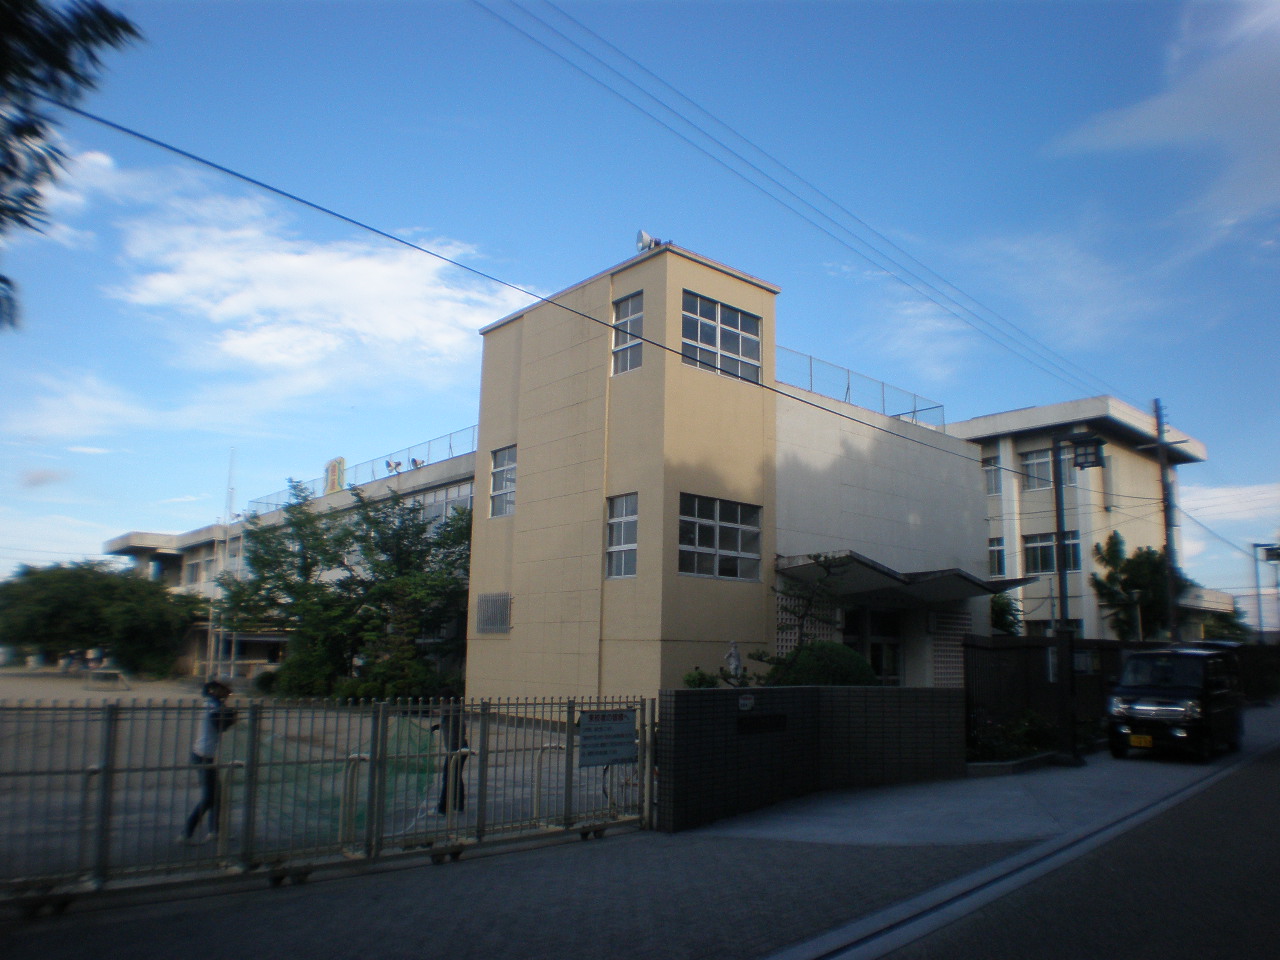 Primary school. Sagara to elementary school (elementary school) 1047m